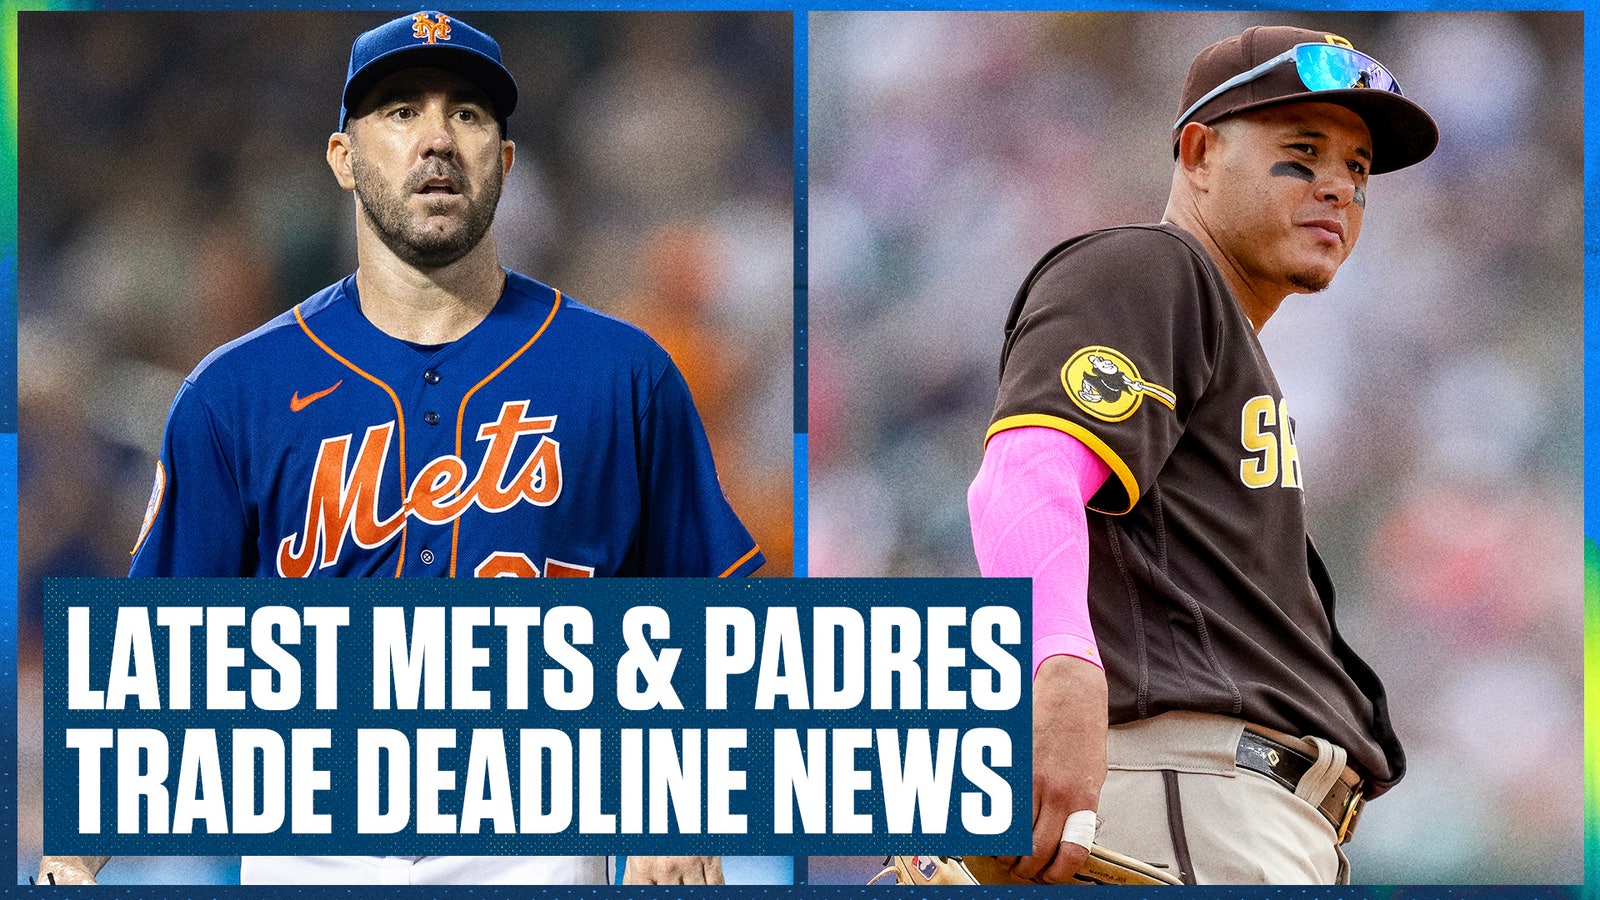 Ken Rosenthal on the latest trade deadline rumors on the Mets & Padres